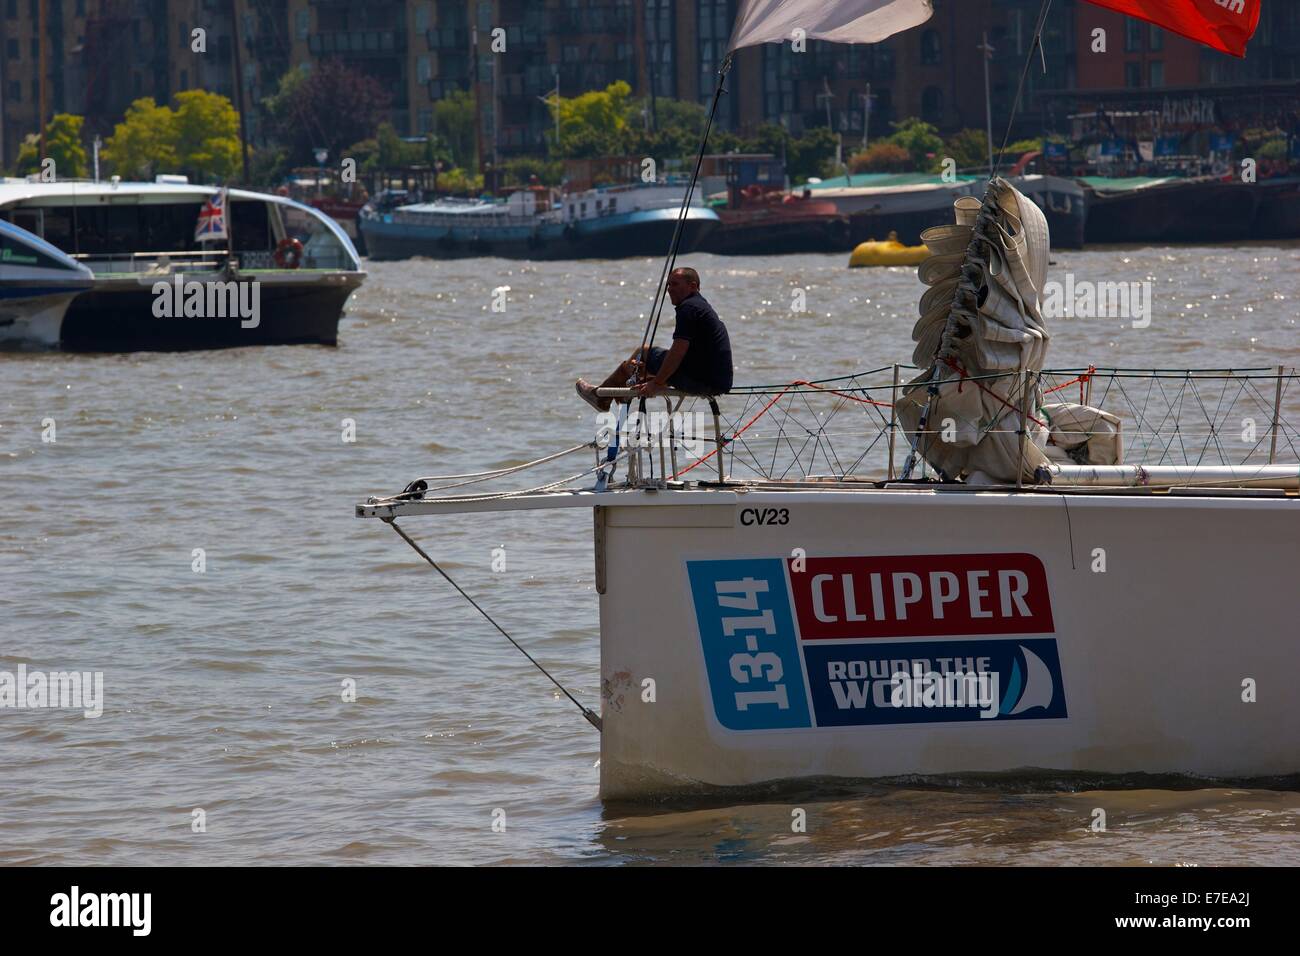 Clipper round the world yacht race 2013-2014 Membre de l'équipage silhouetté tamise Londres Angleterre Europe Banque D'Images